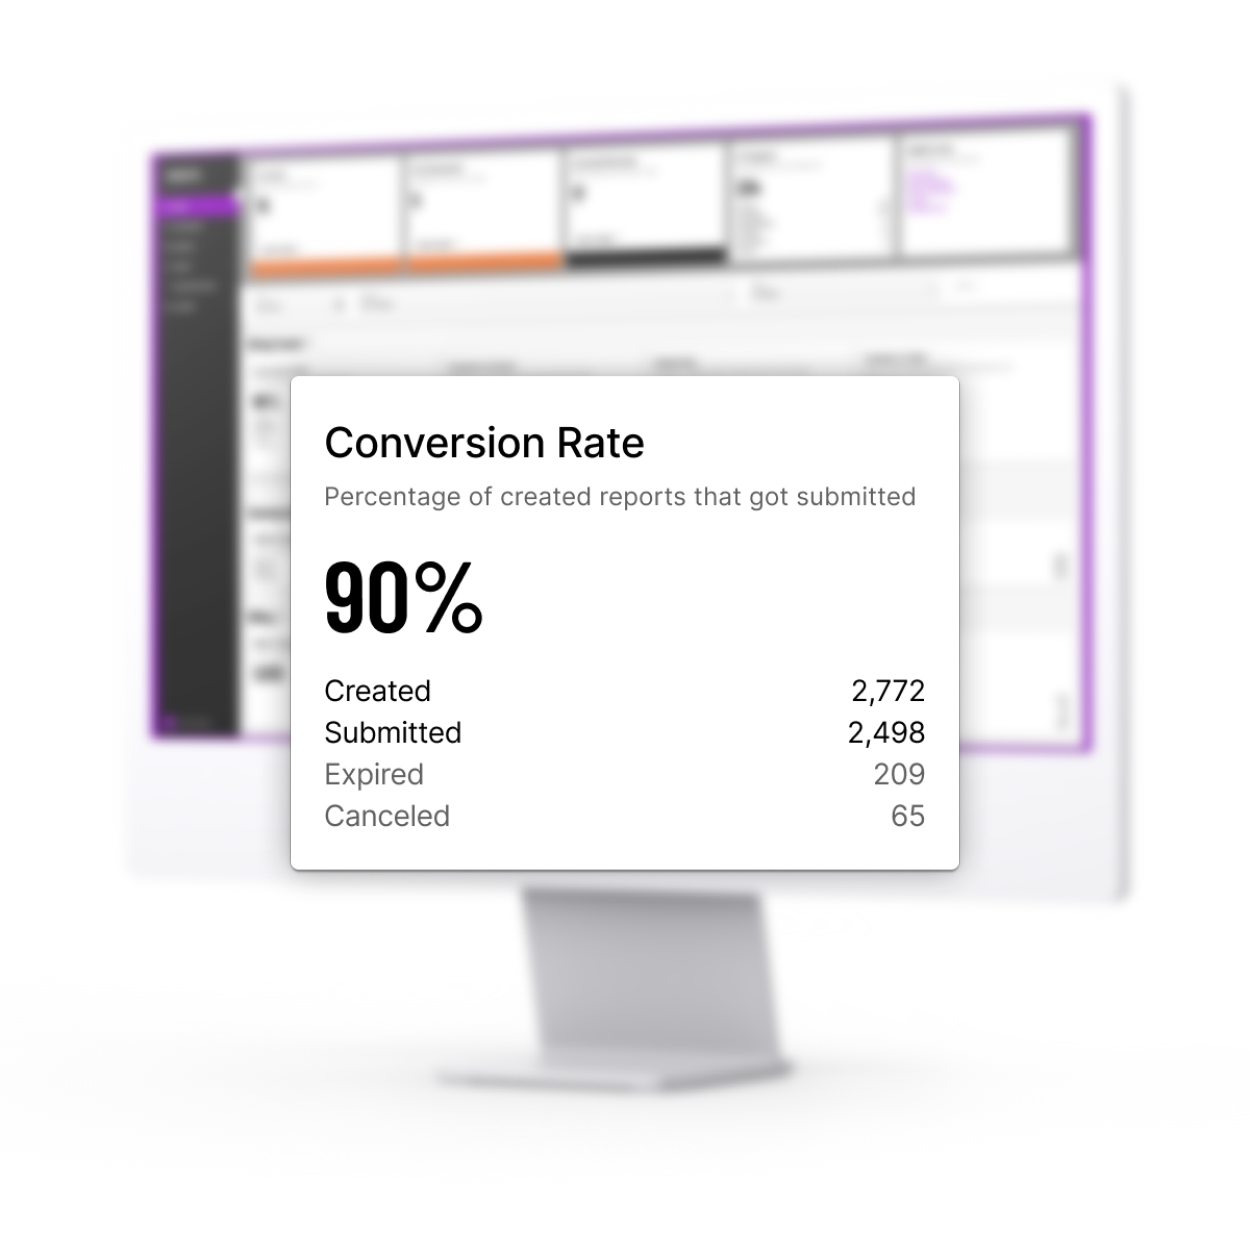 Yardstik Dashboard conversion rate image